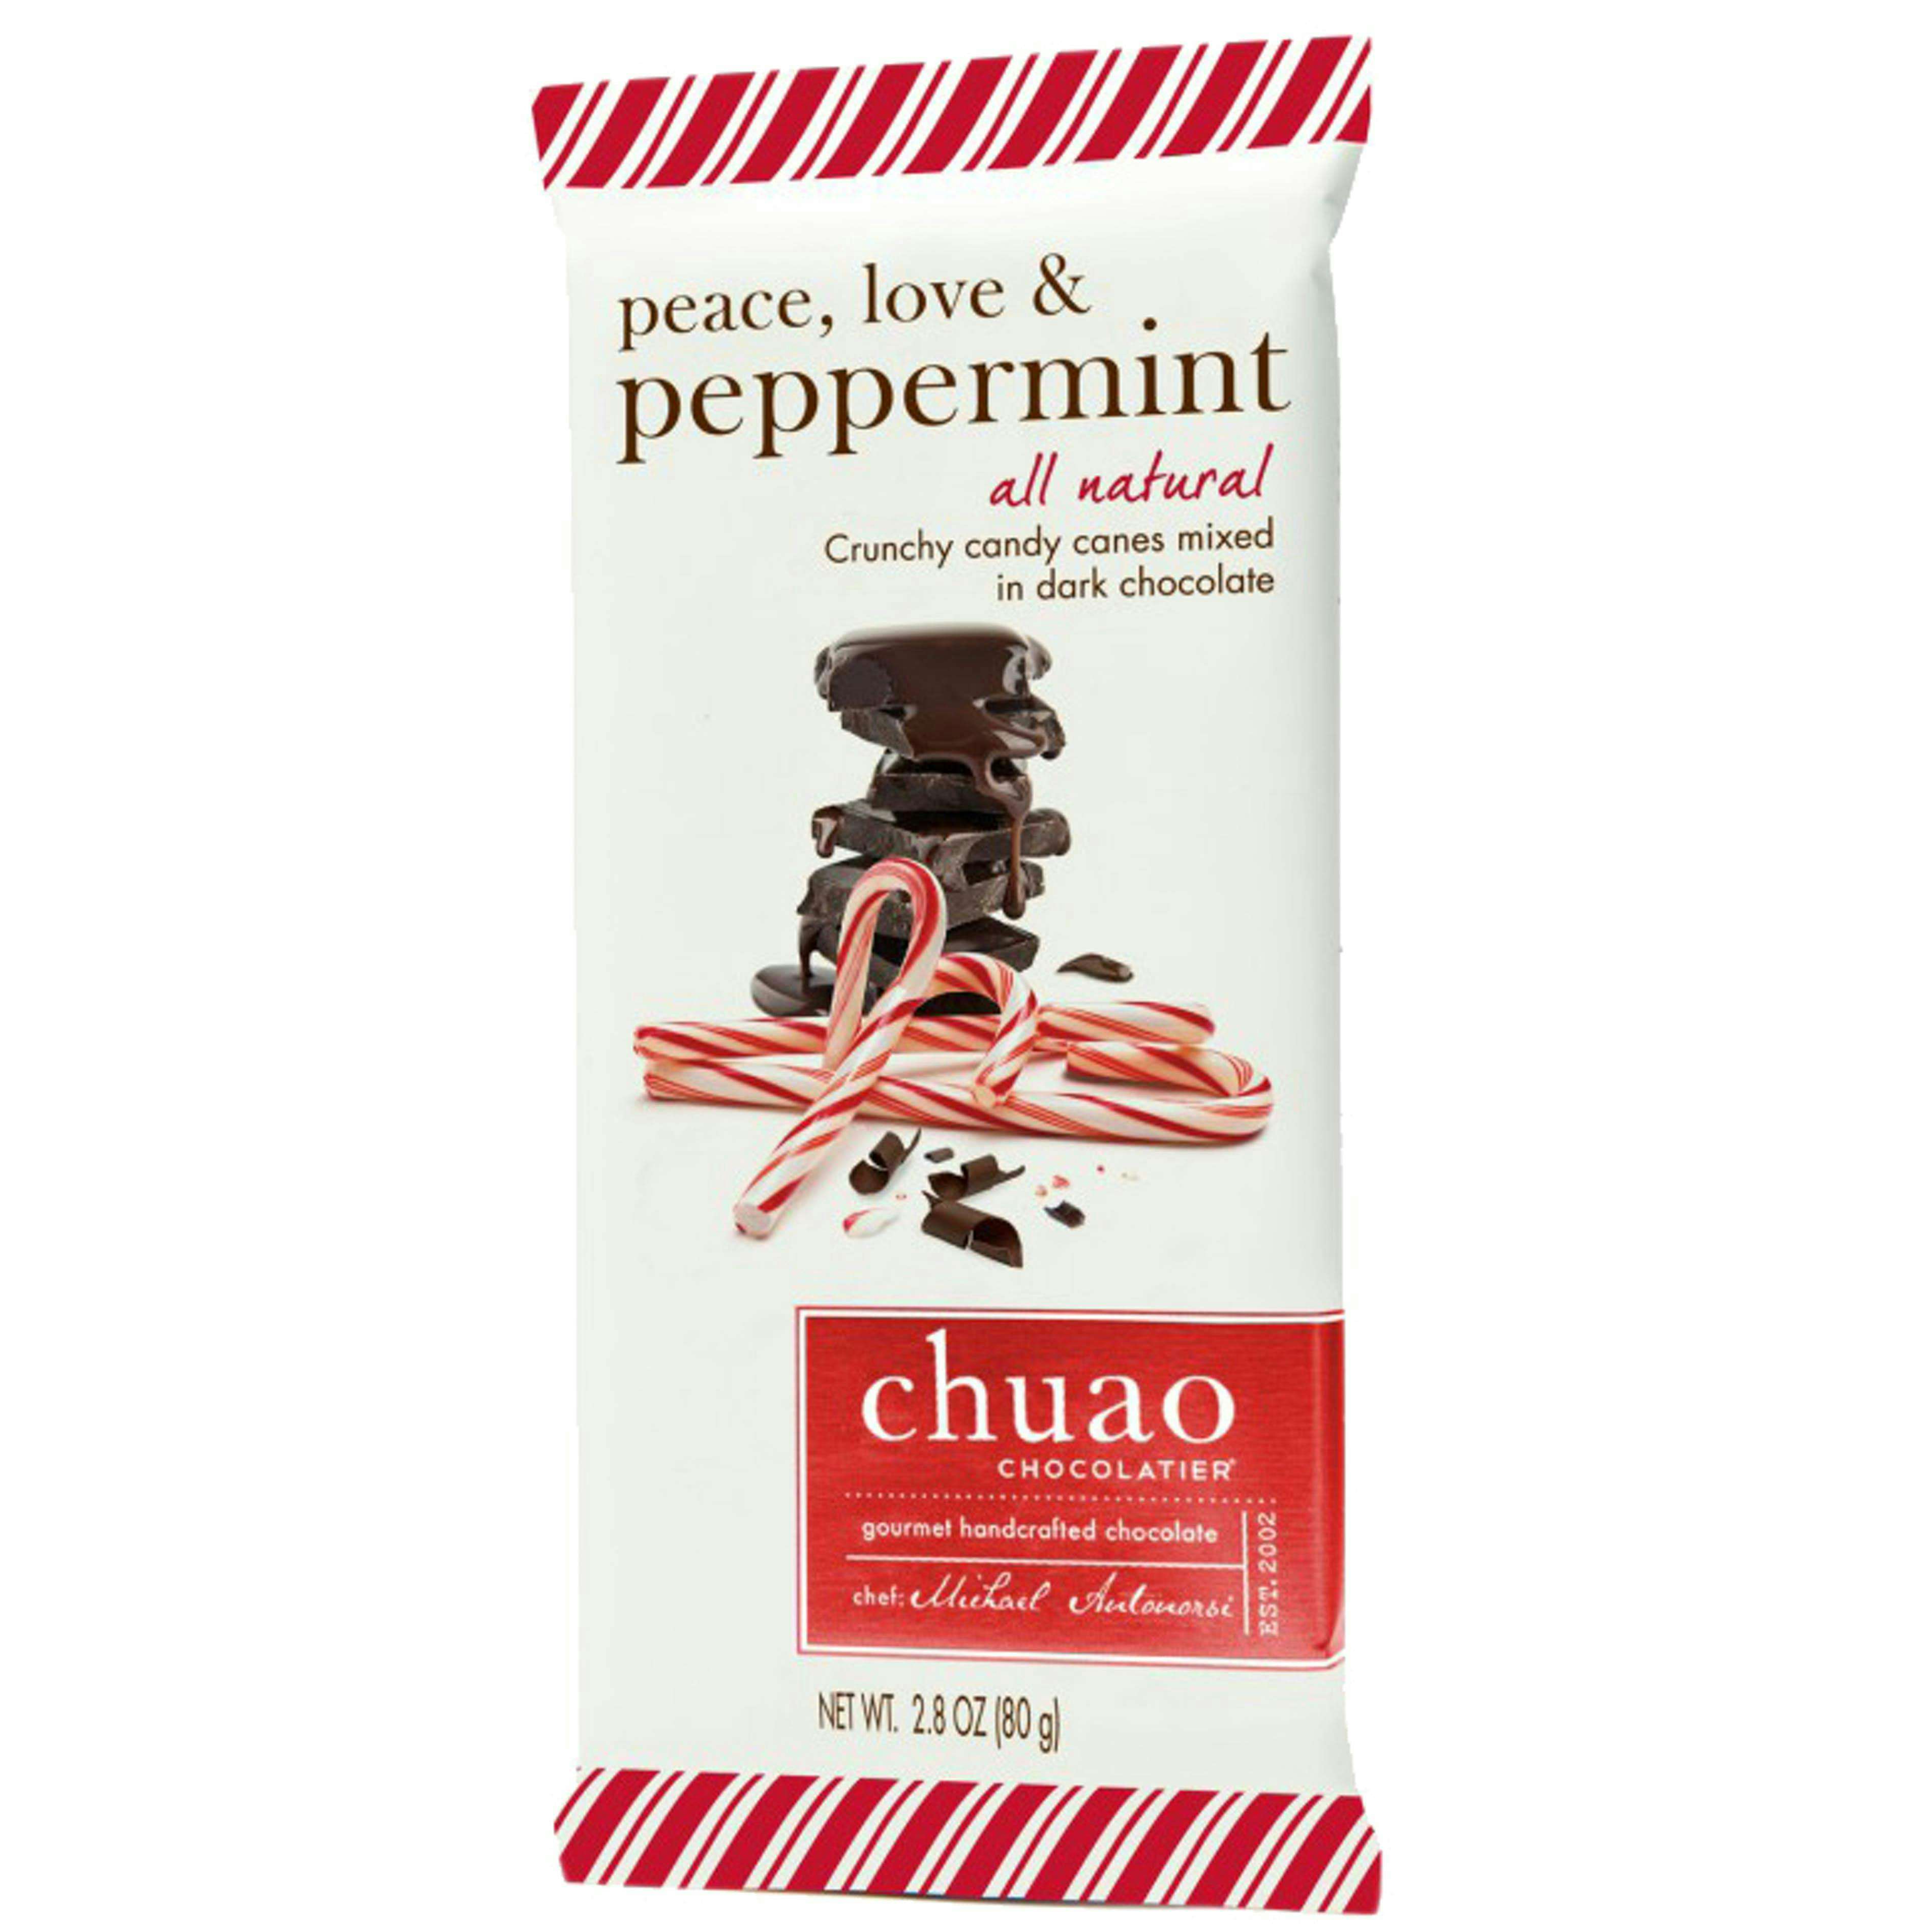 Chuao peppermint chocolate